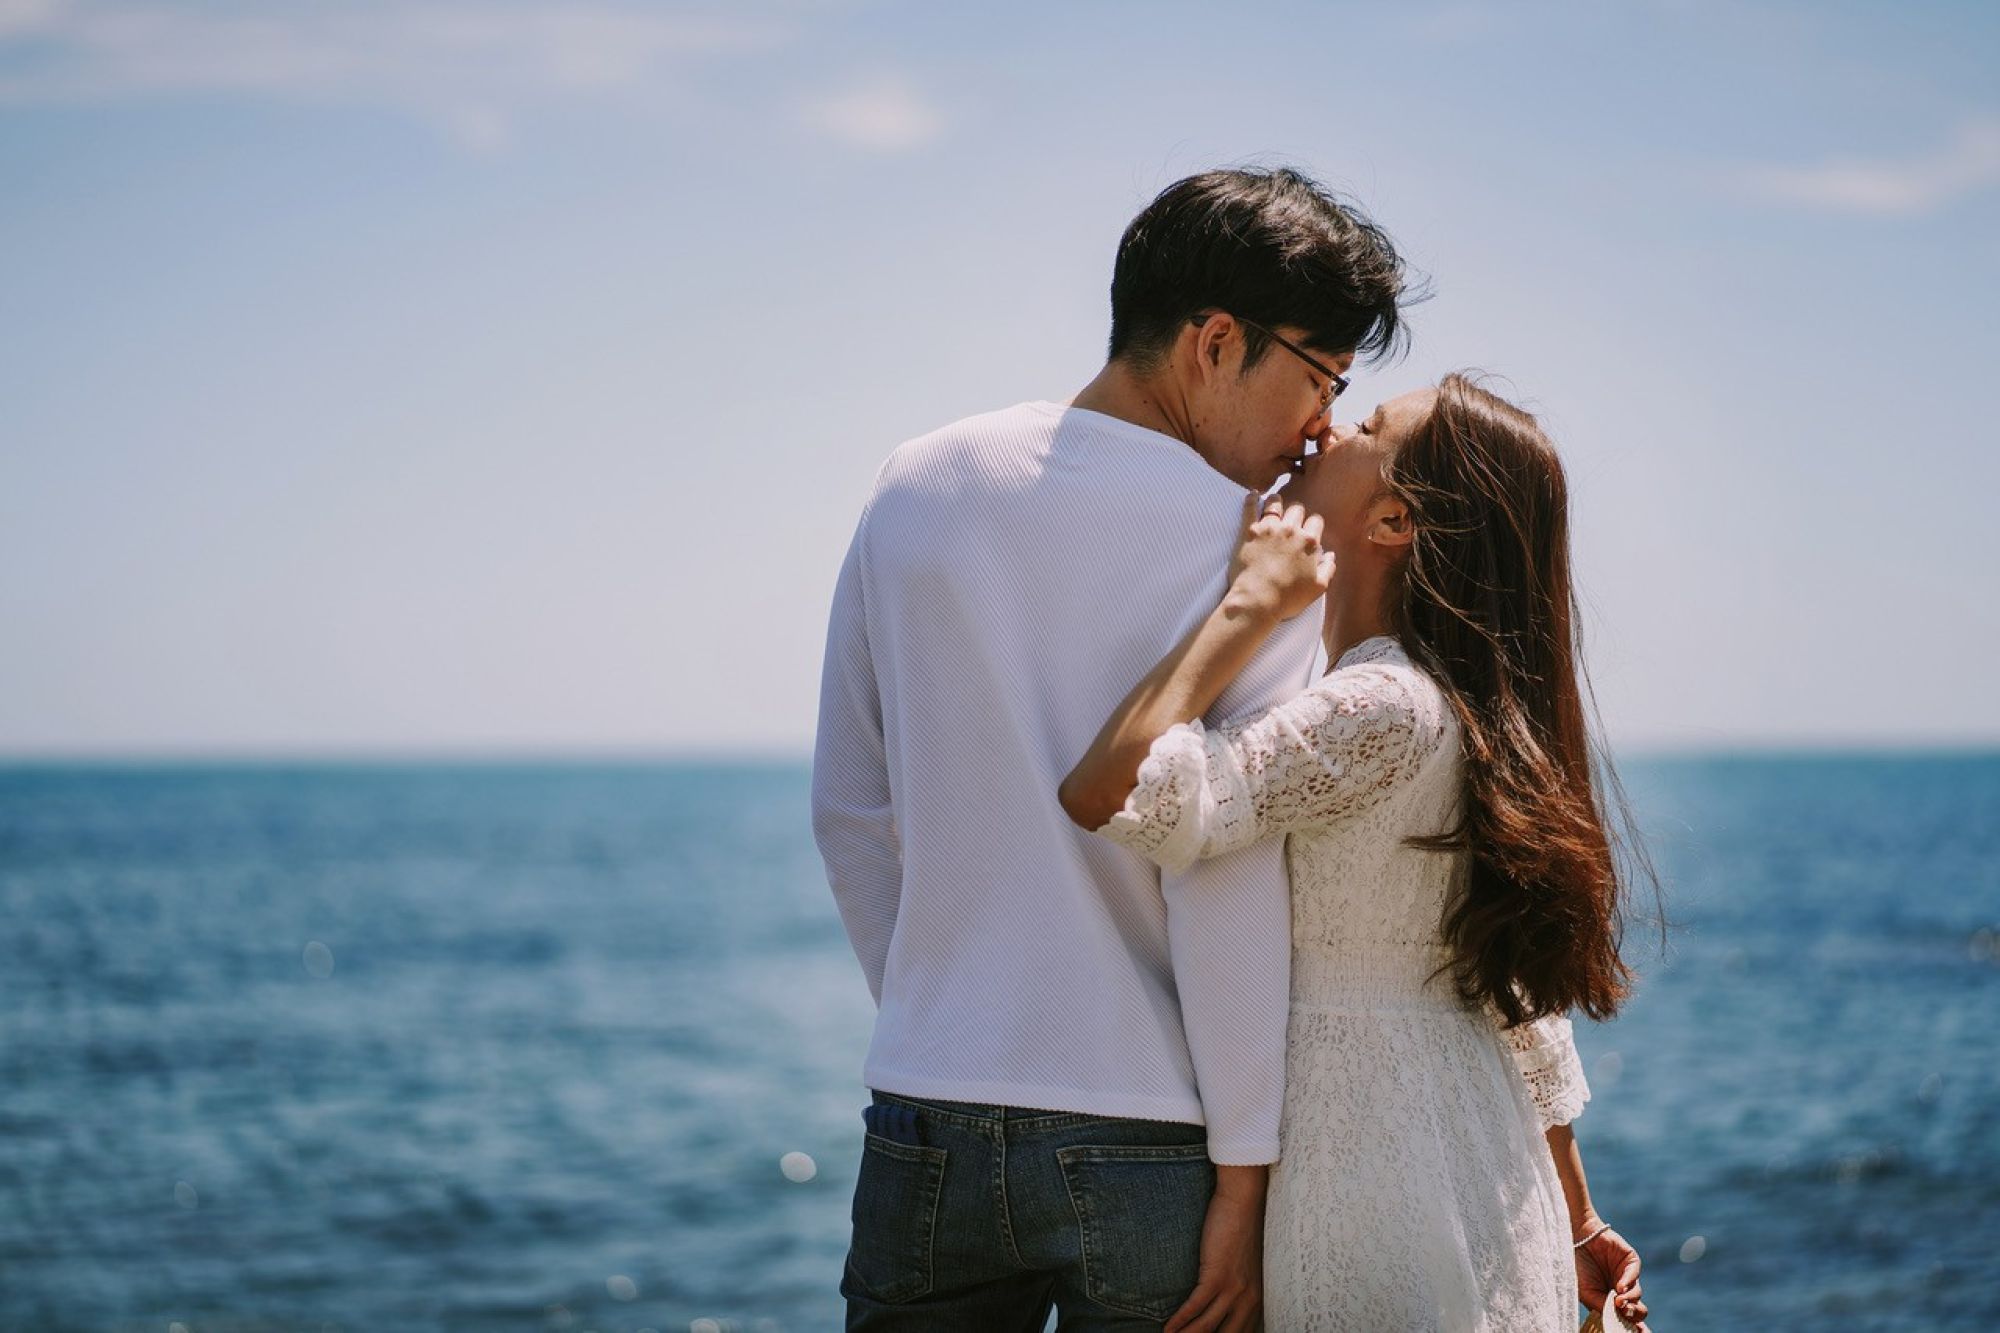 Click to enlarge image 021 kiss Korean spouses acitrezza.jpg